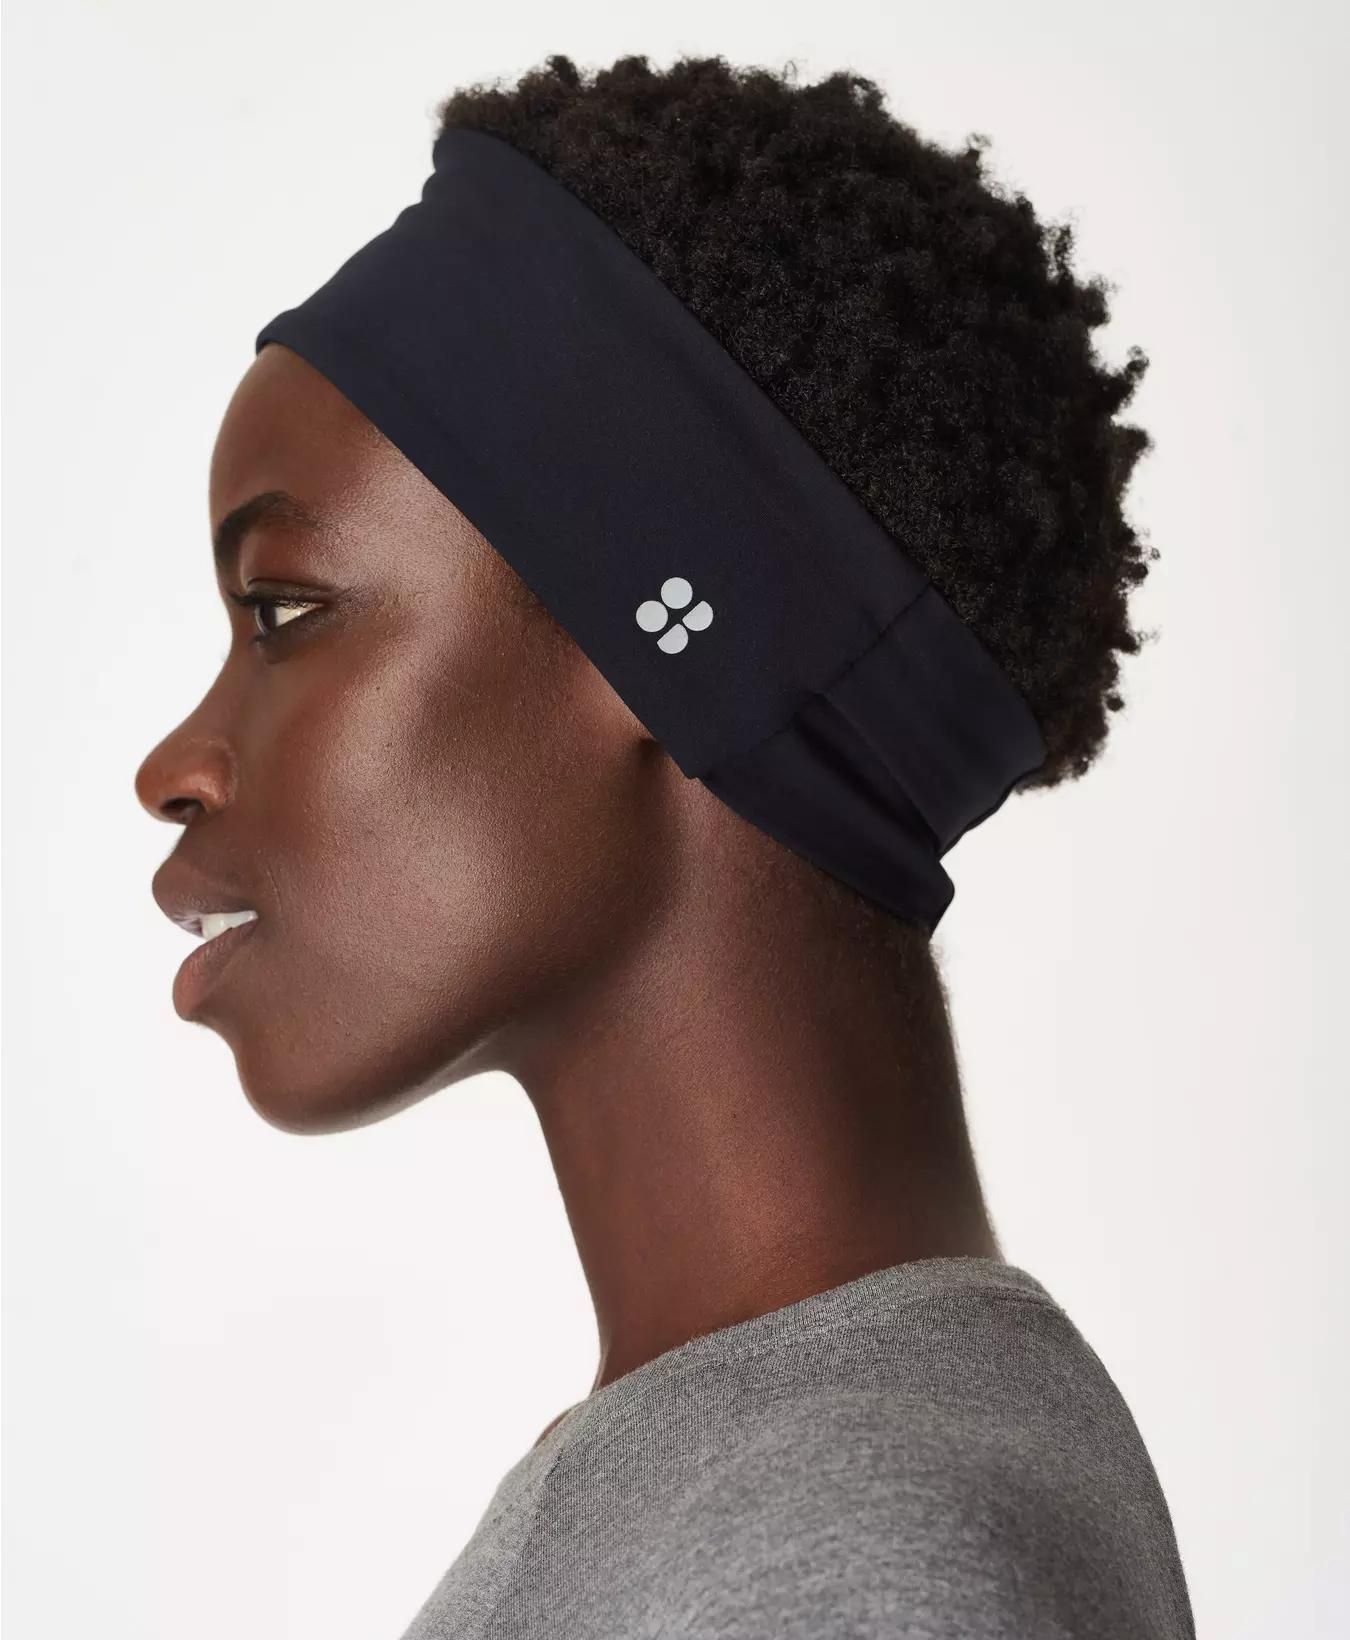 PACEARM Headbands for Men & Women Headband for Sports Workout Quick-Dry Head Bands Comfortable Running